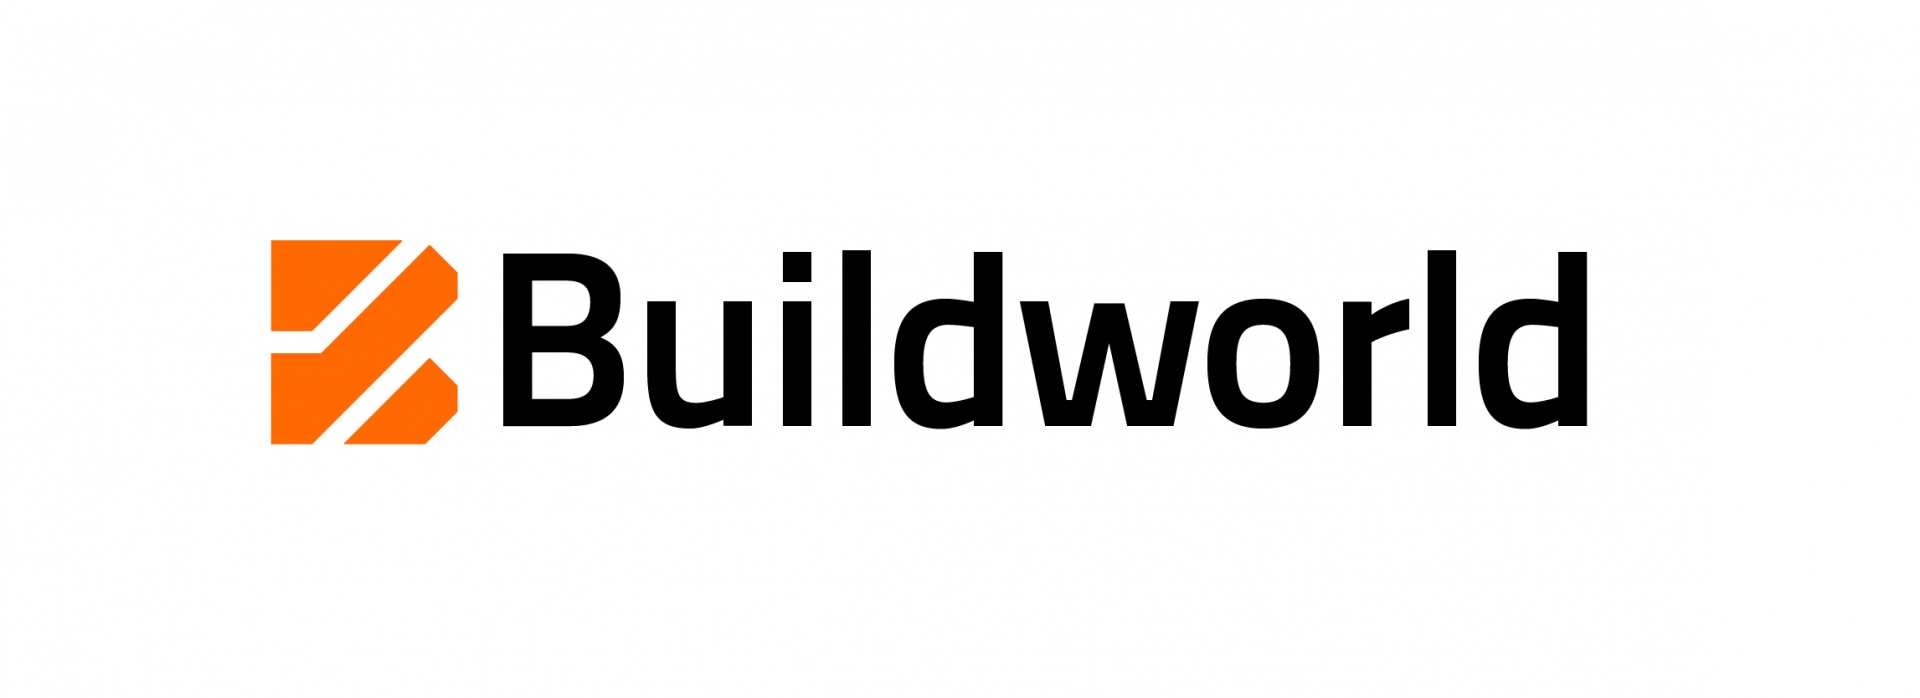 Buildworld